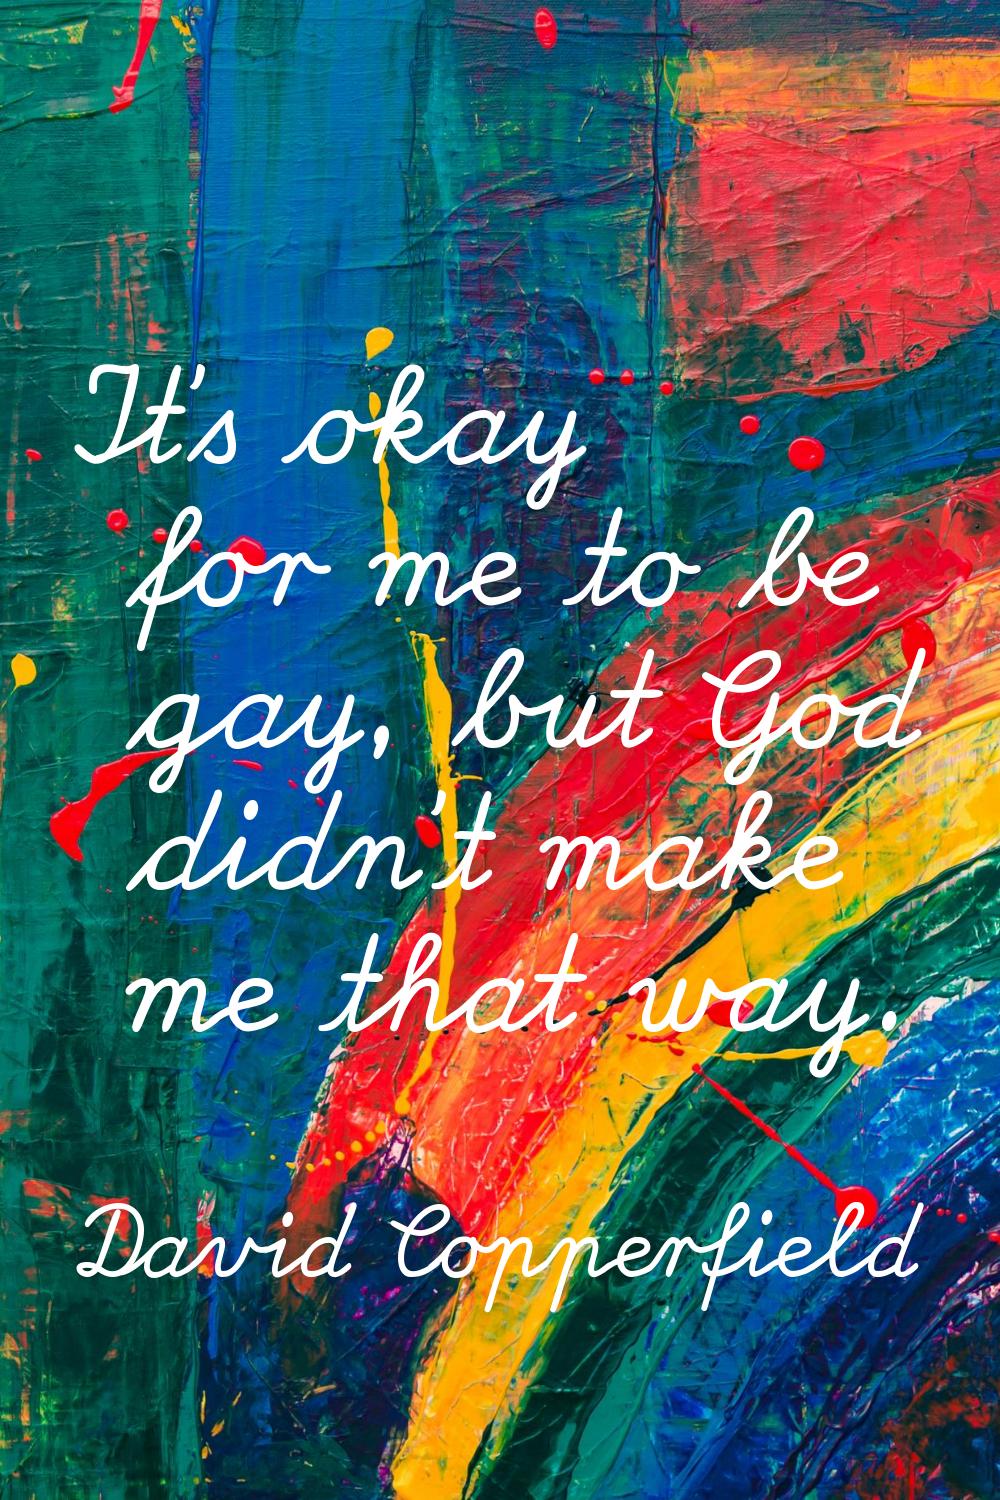 It's okay for me to be gay, but God didn't make me that way.